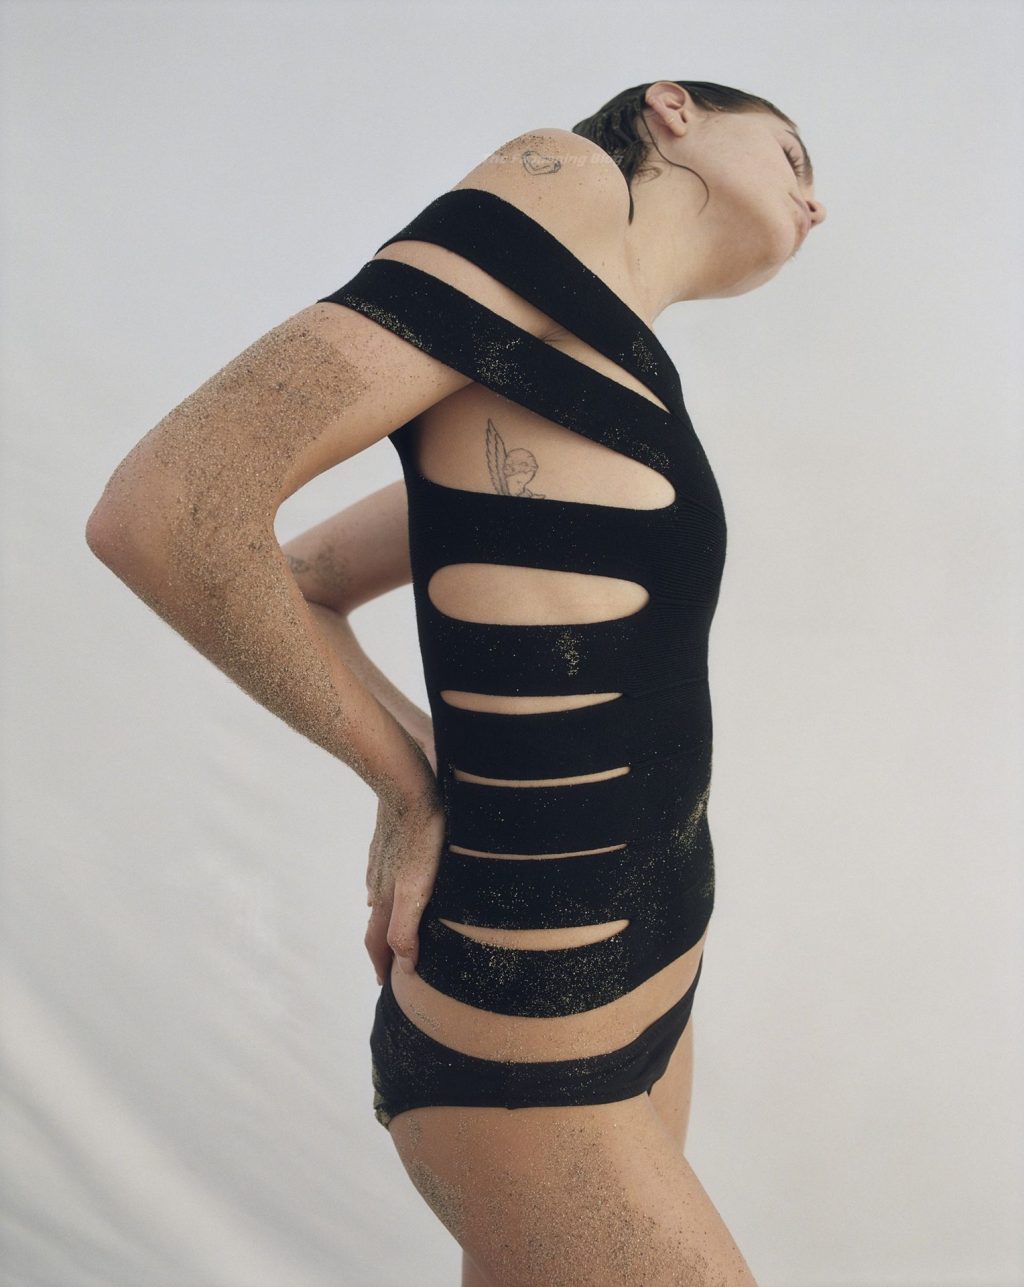 Kaia Gerber Nude &amp; Sexy – i-D Magazine (14 Photos)